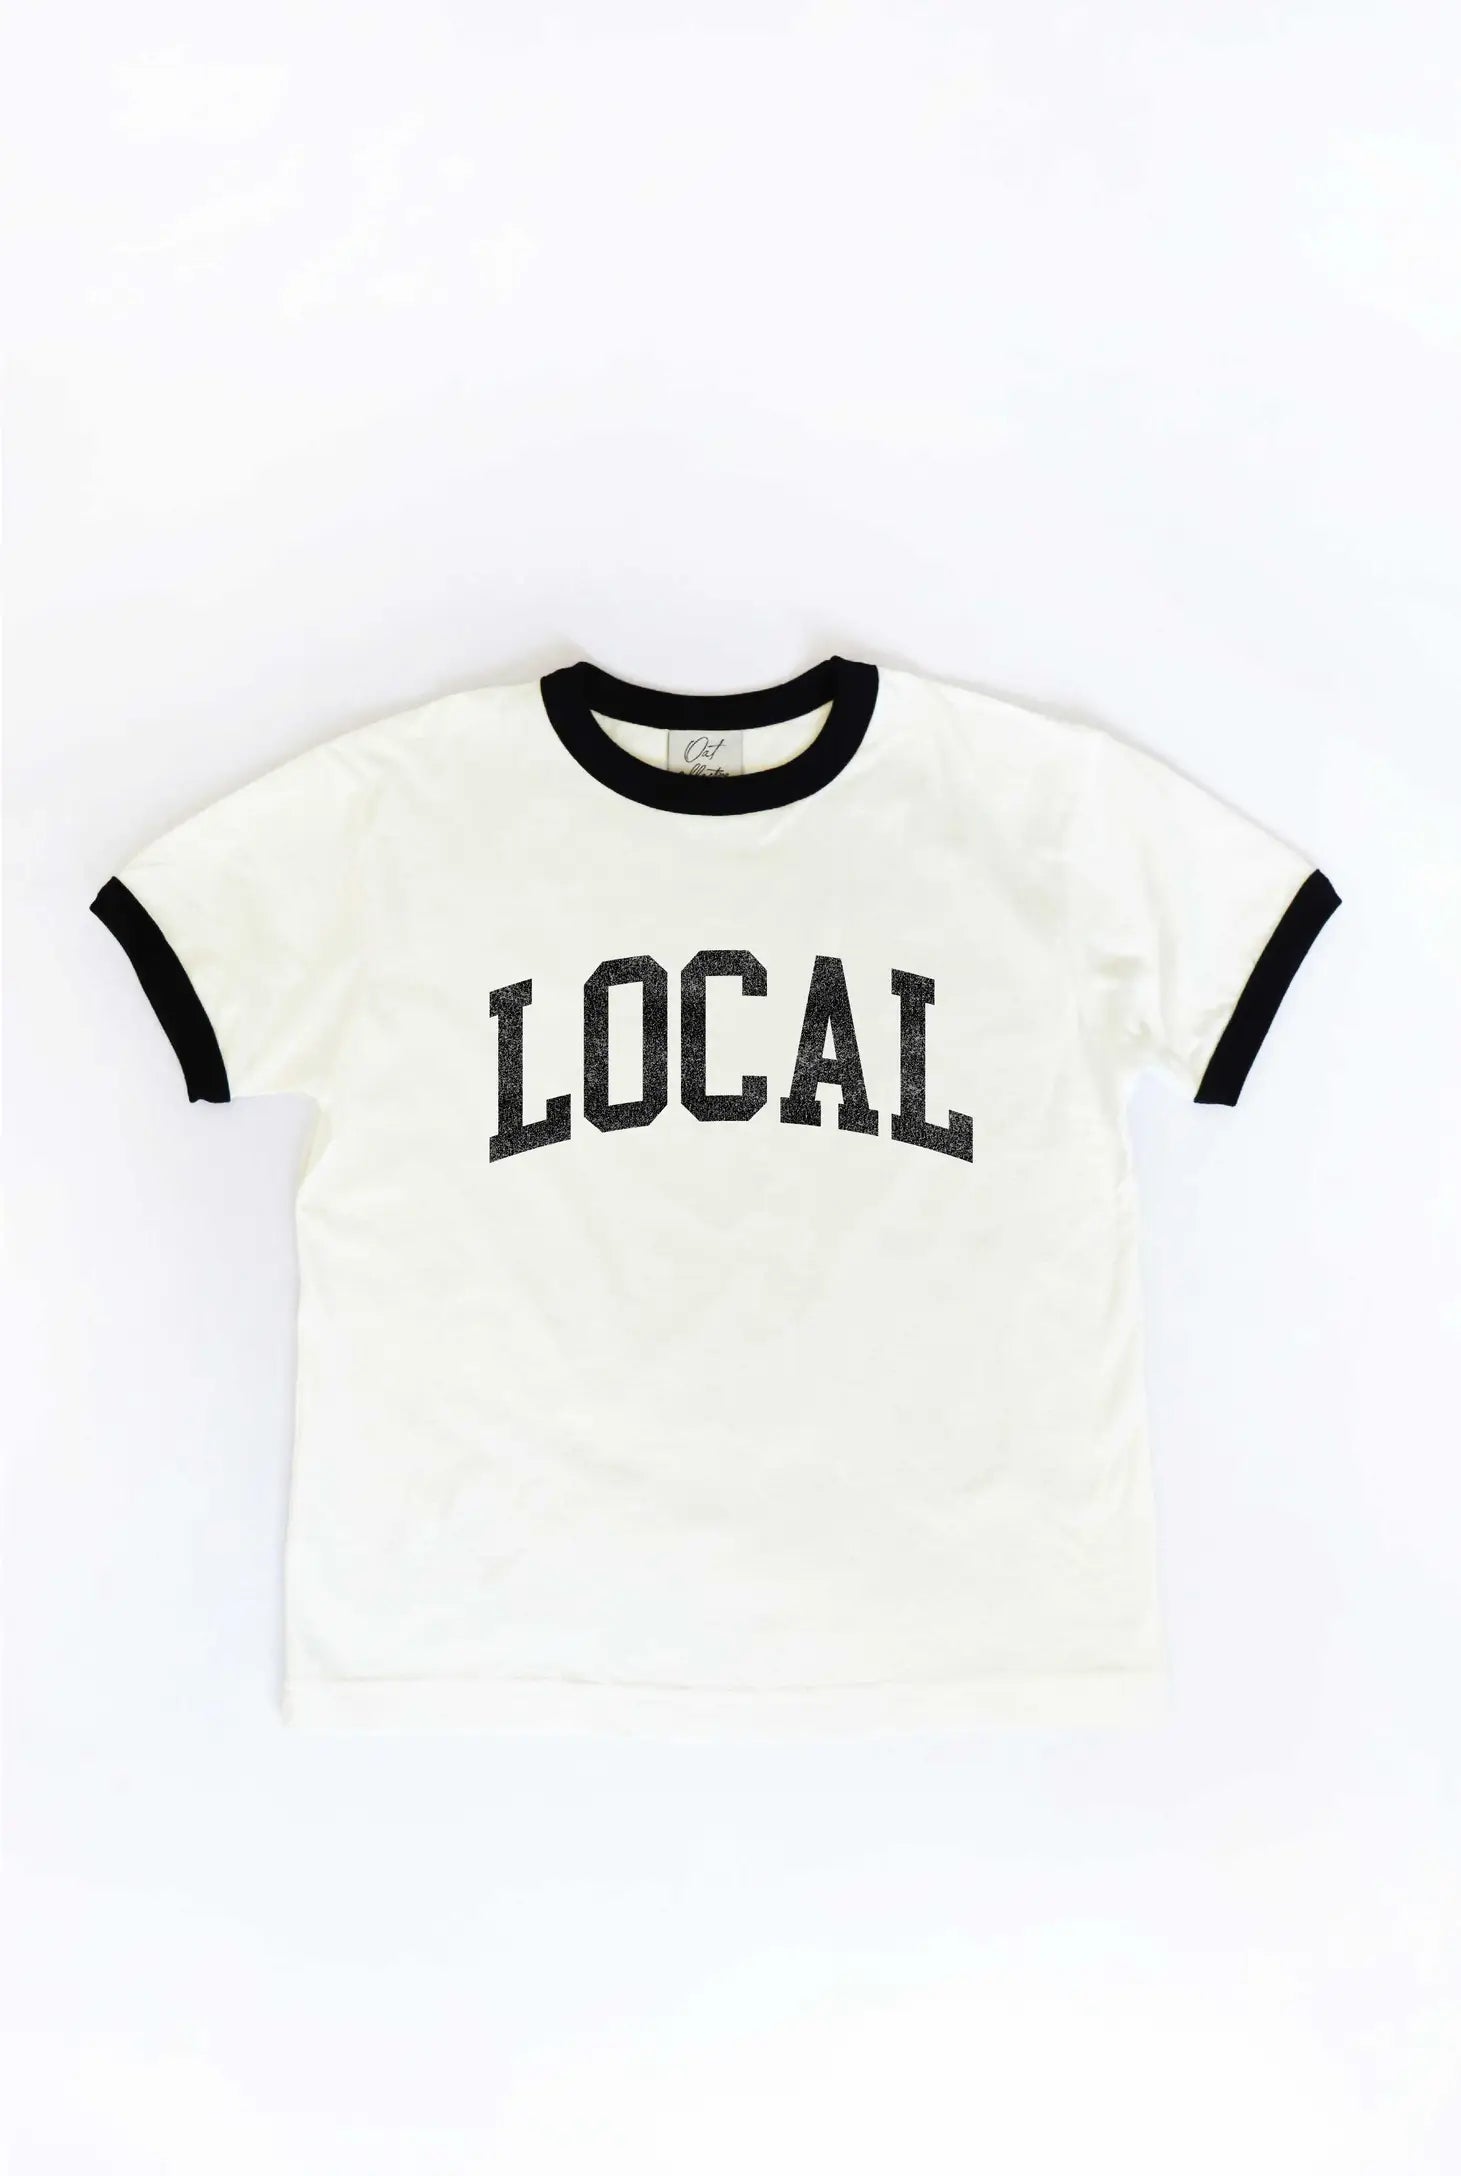 Local - Toddler T-Shirt